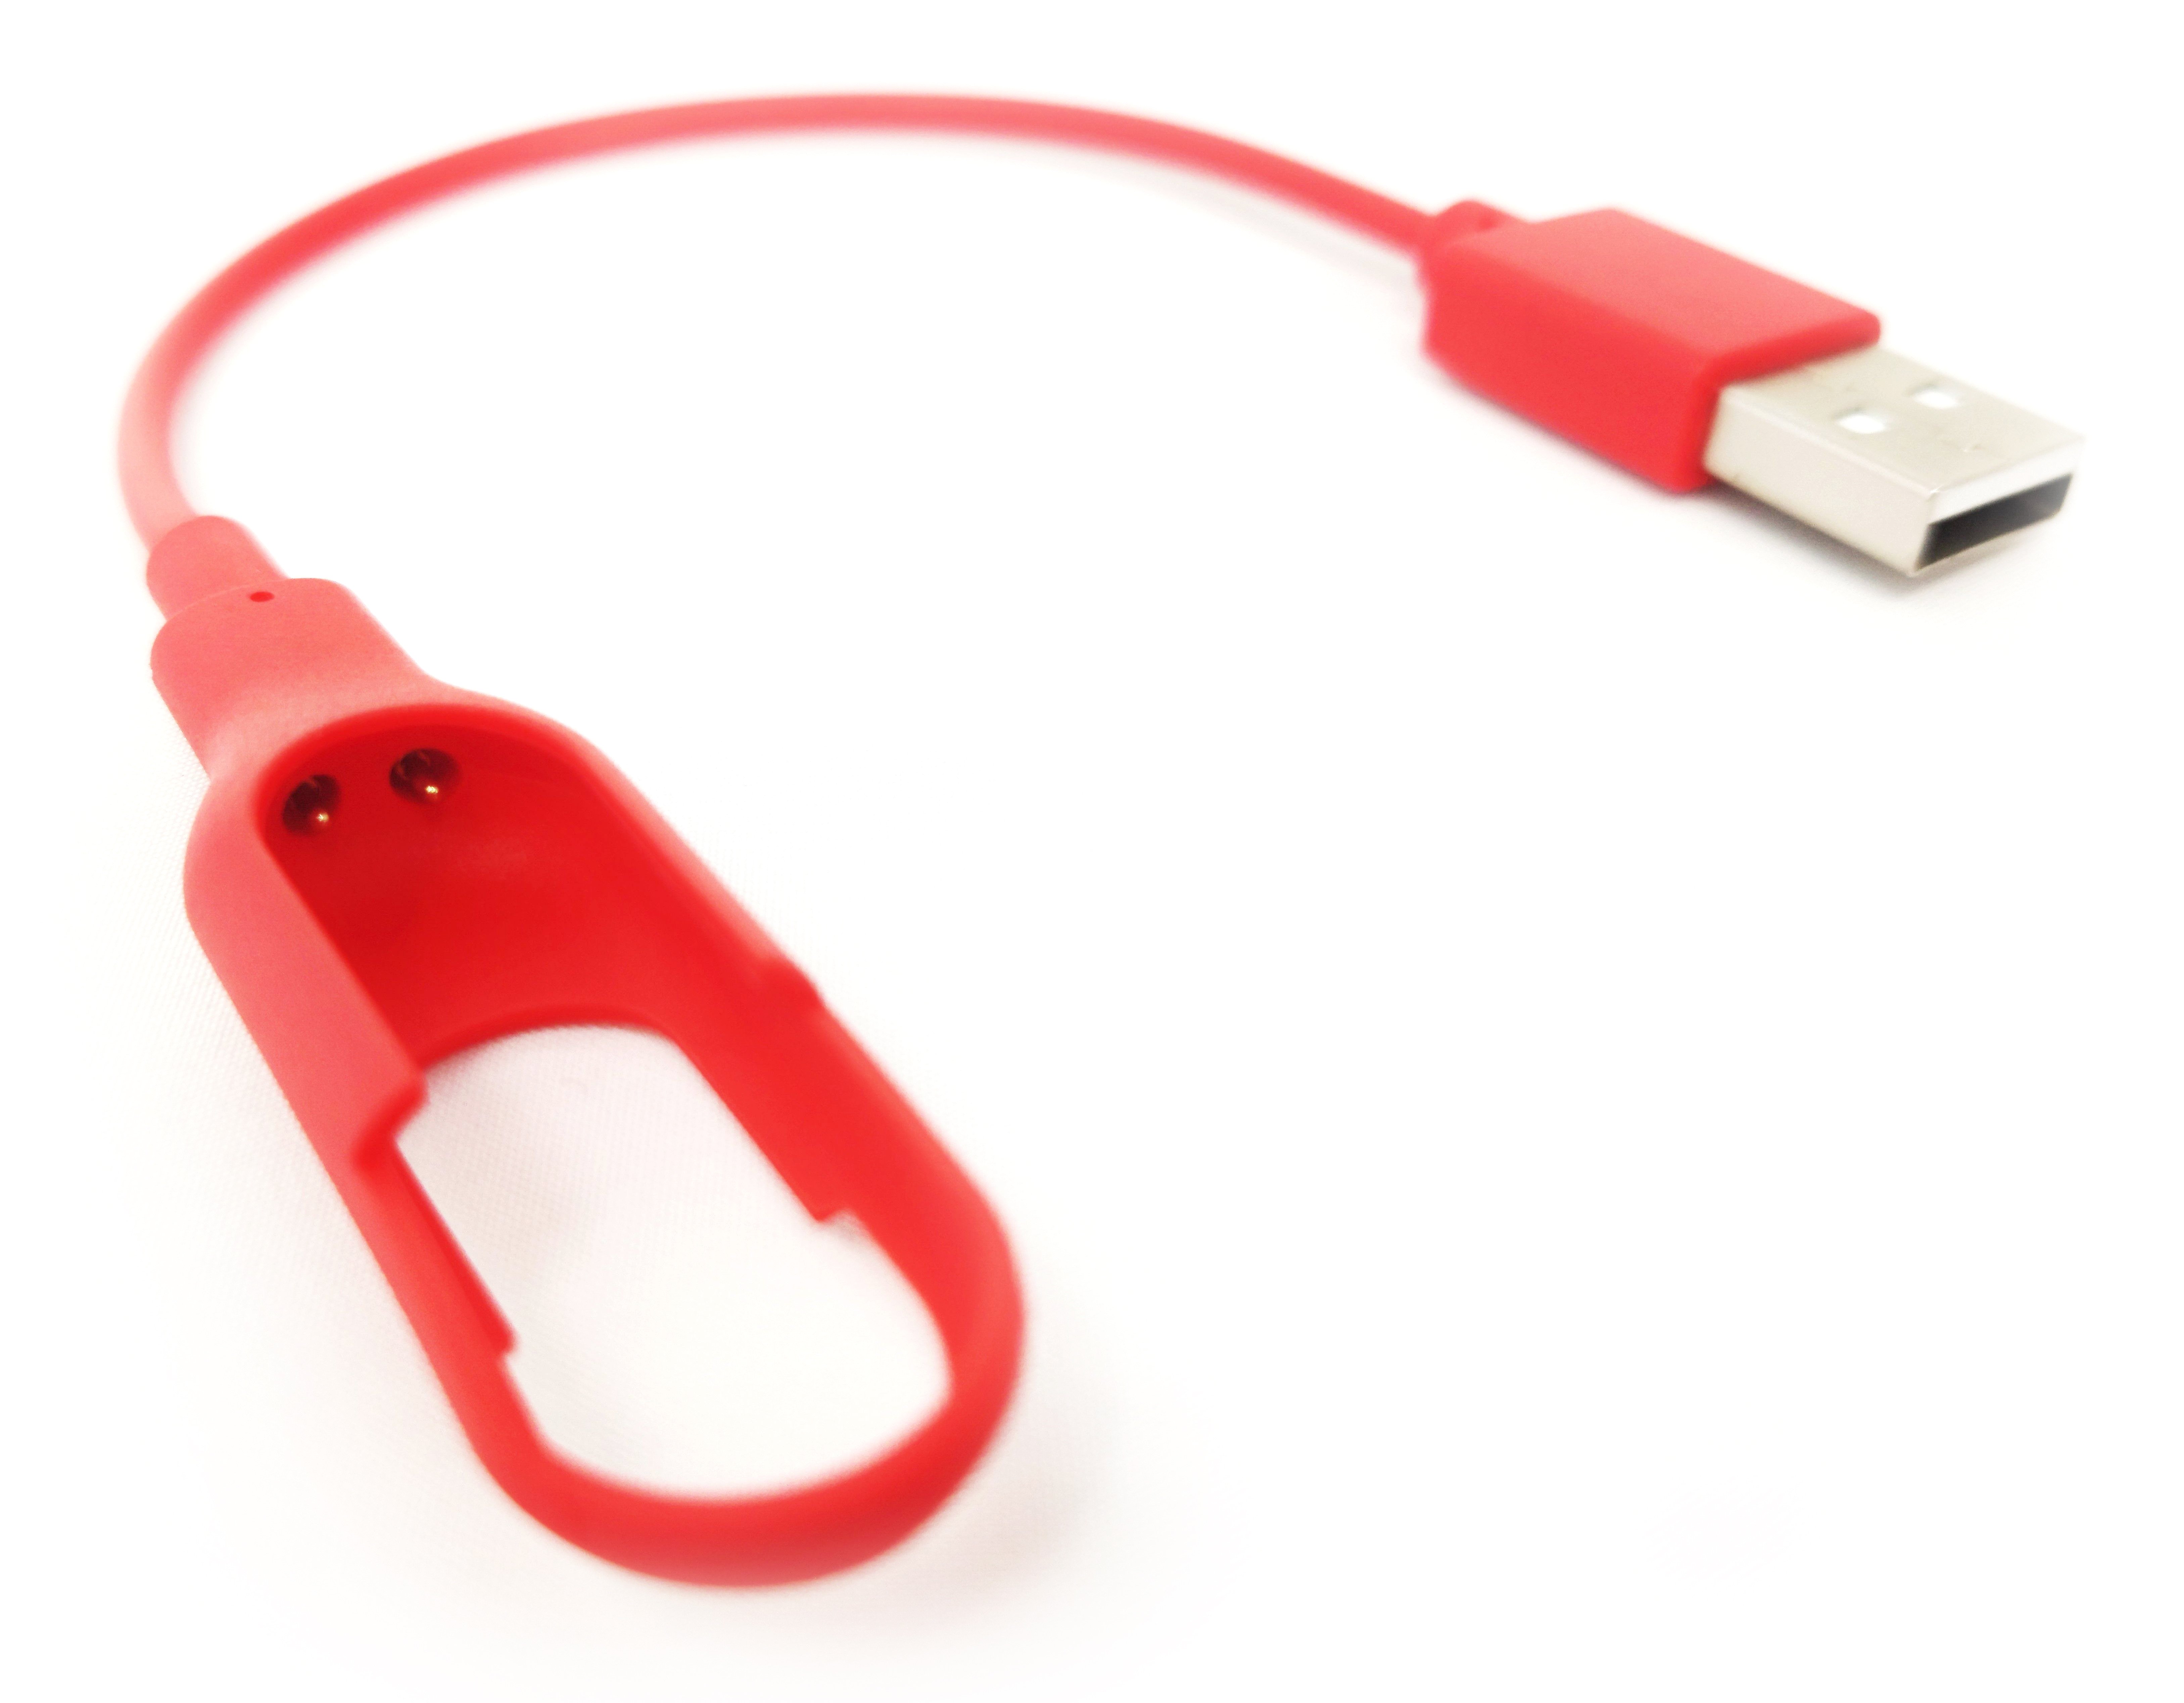 Go-tcha Super-Charger - Enclosed USB-Charging Cable